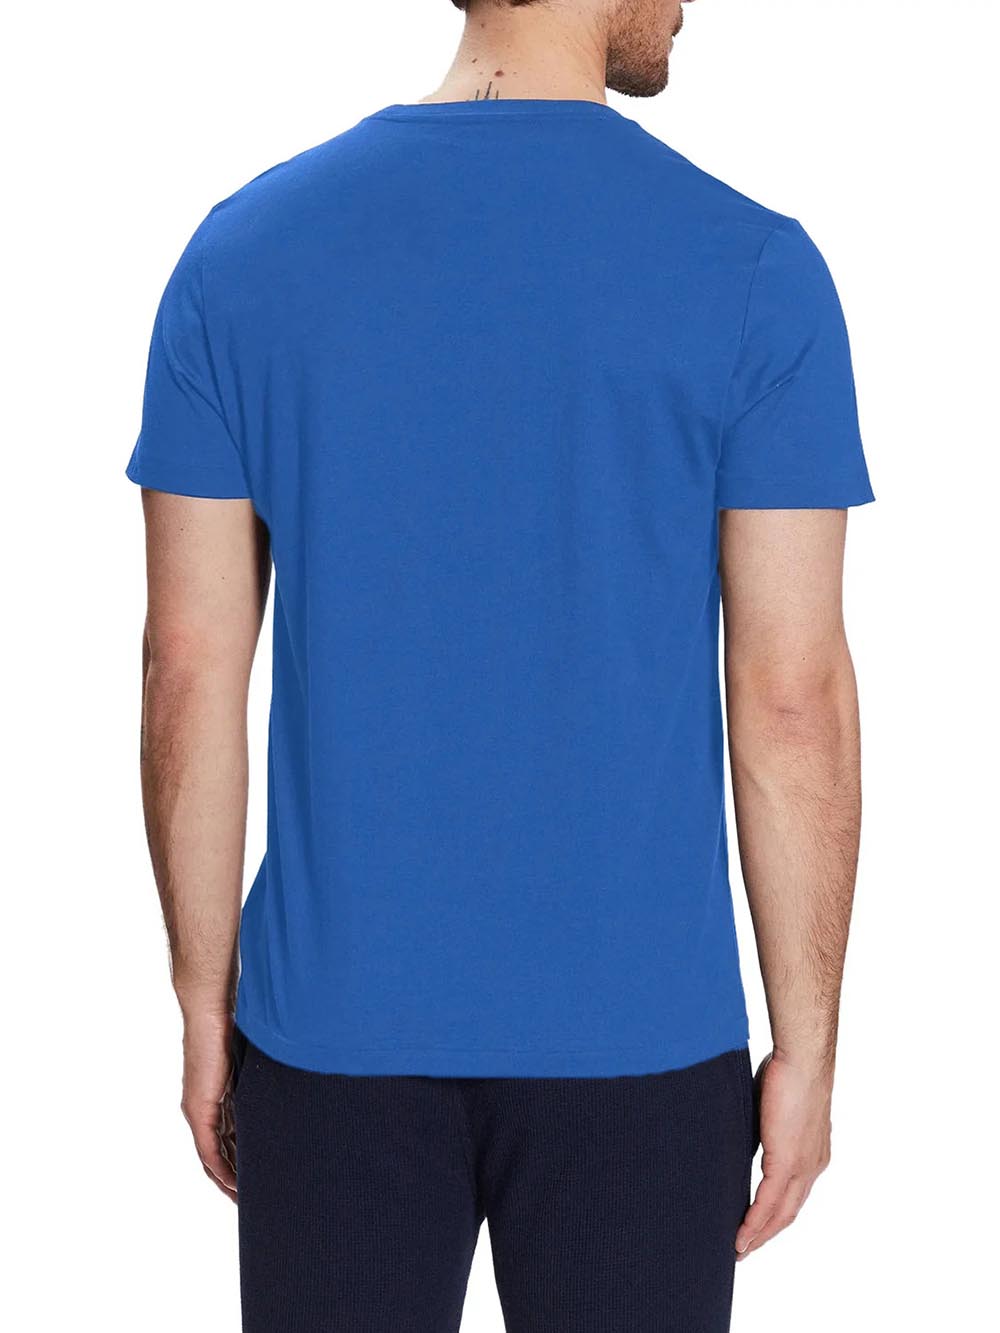 Polo Ralph Lauren T-shirt Uomo 714899613 Bluette